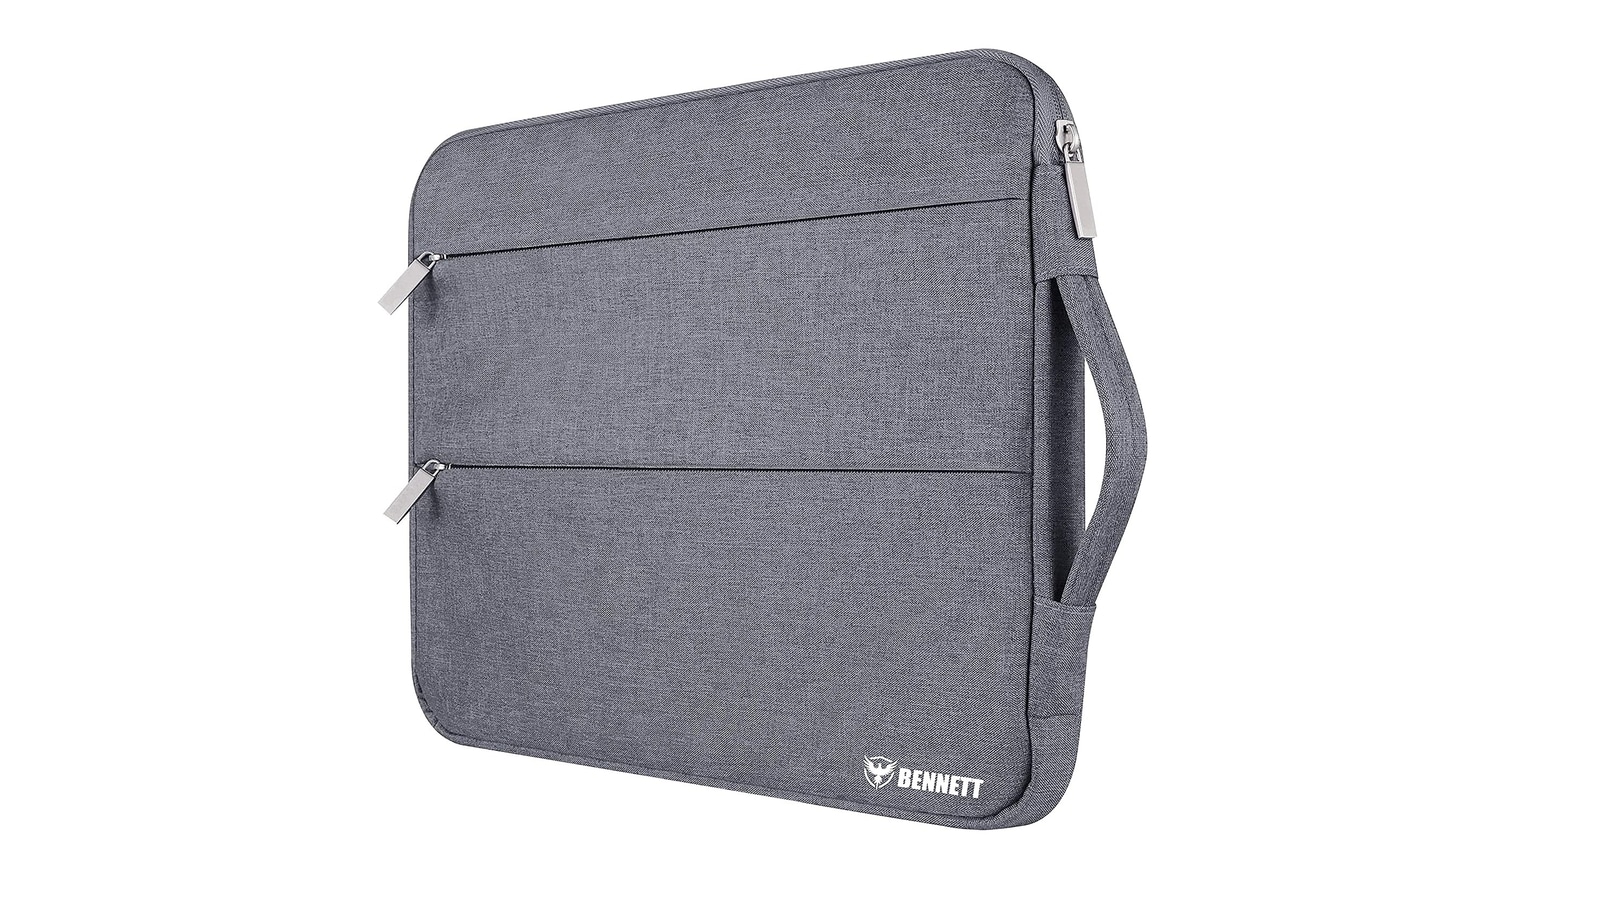 15.6 Inch Laptop Bag Sleeve Case Cover For HP Dell Acer Lenovo Apple